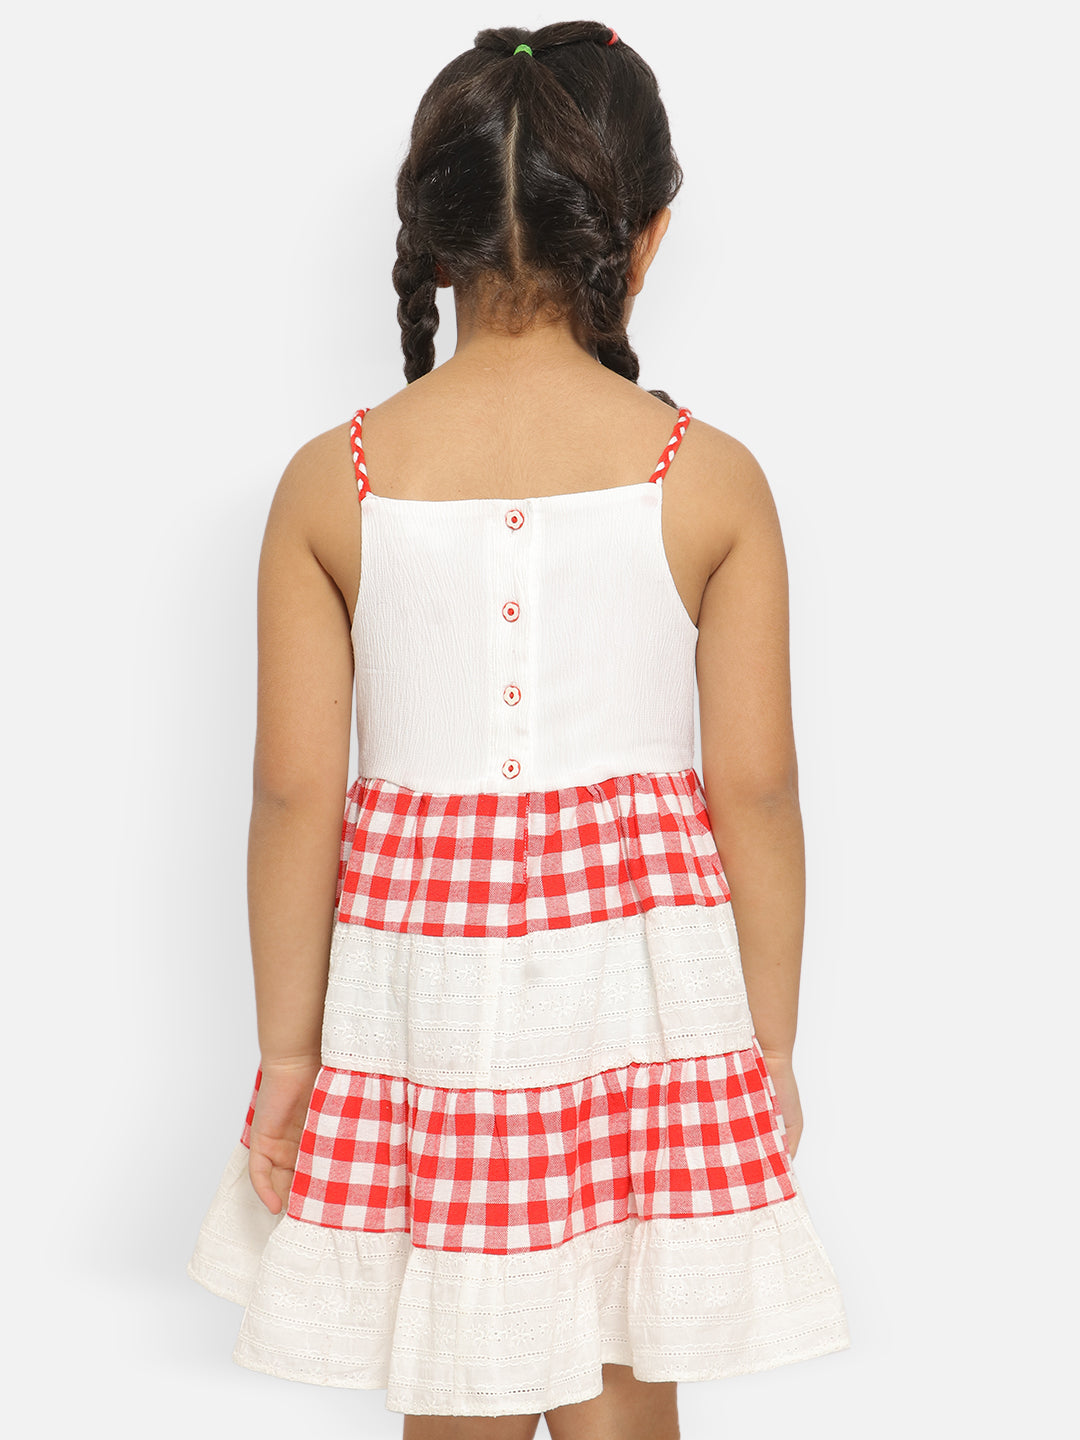 Nautinati Girls Raindeer Embroidered Shoulder Straps Crepe Dress